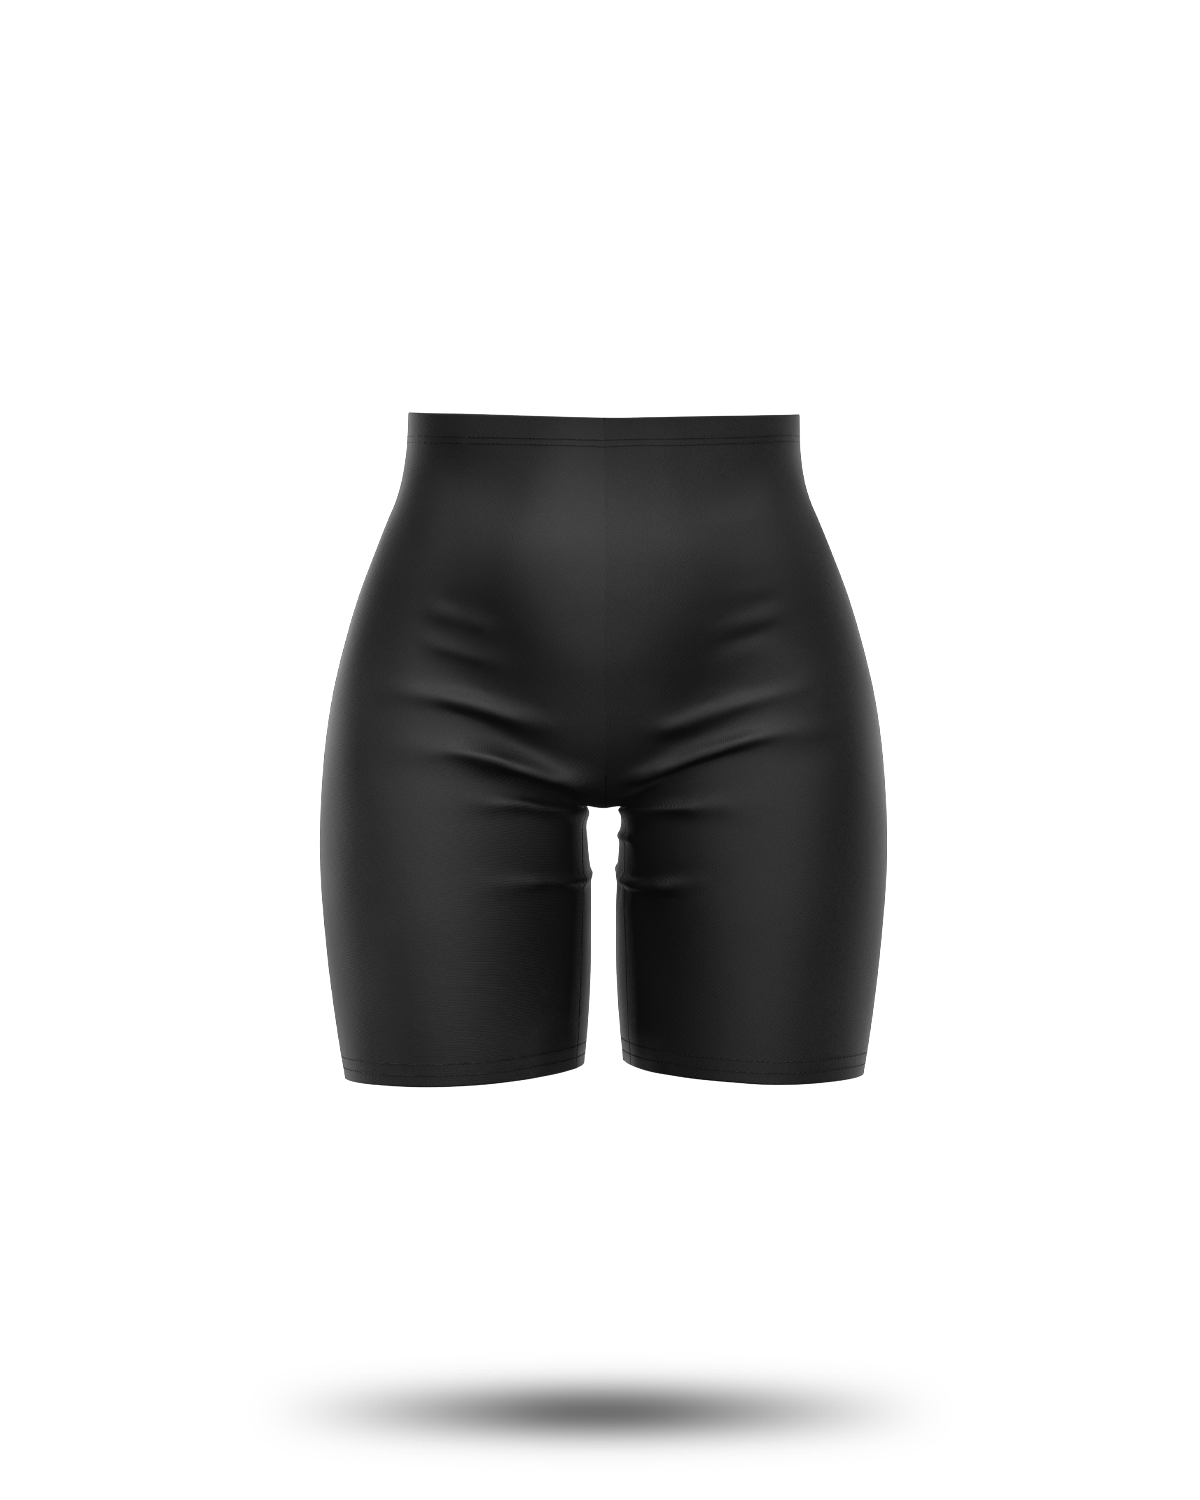 002 - Biker Shorts